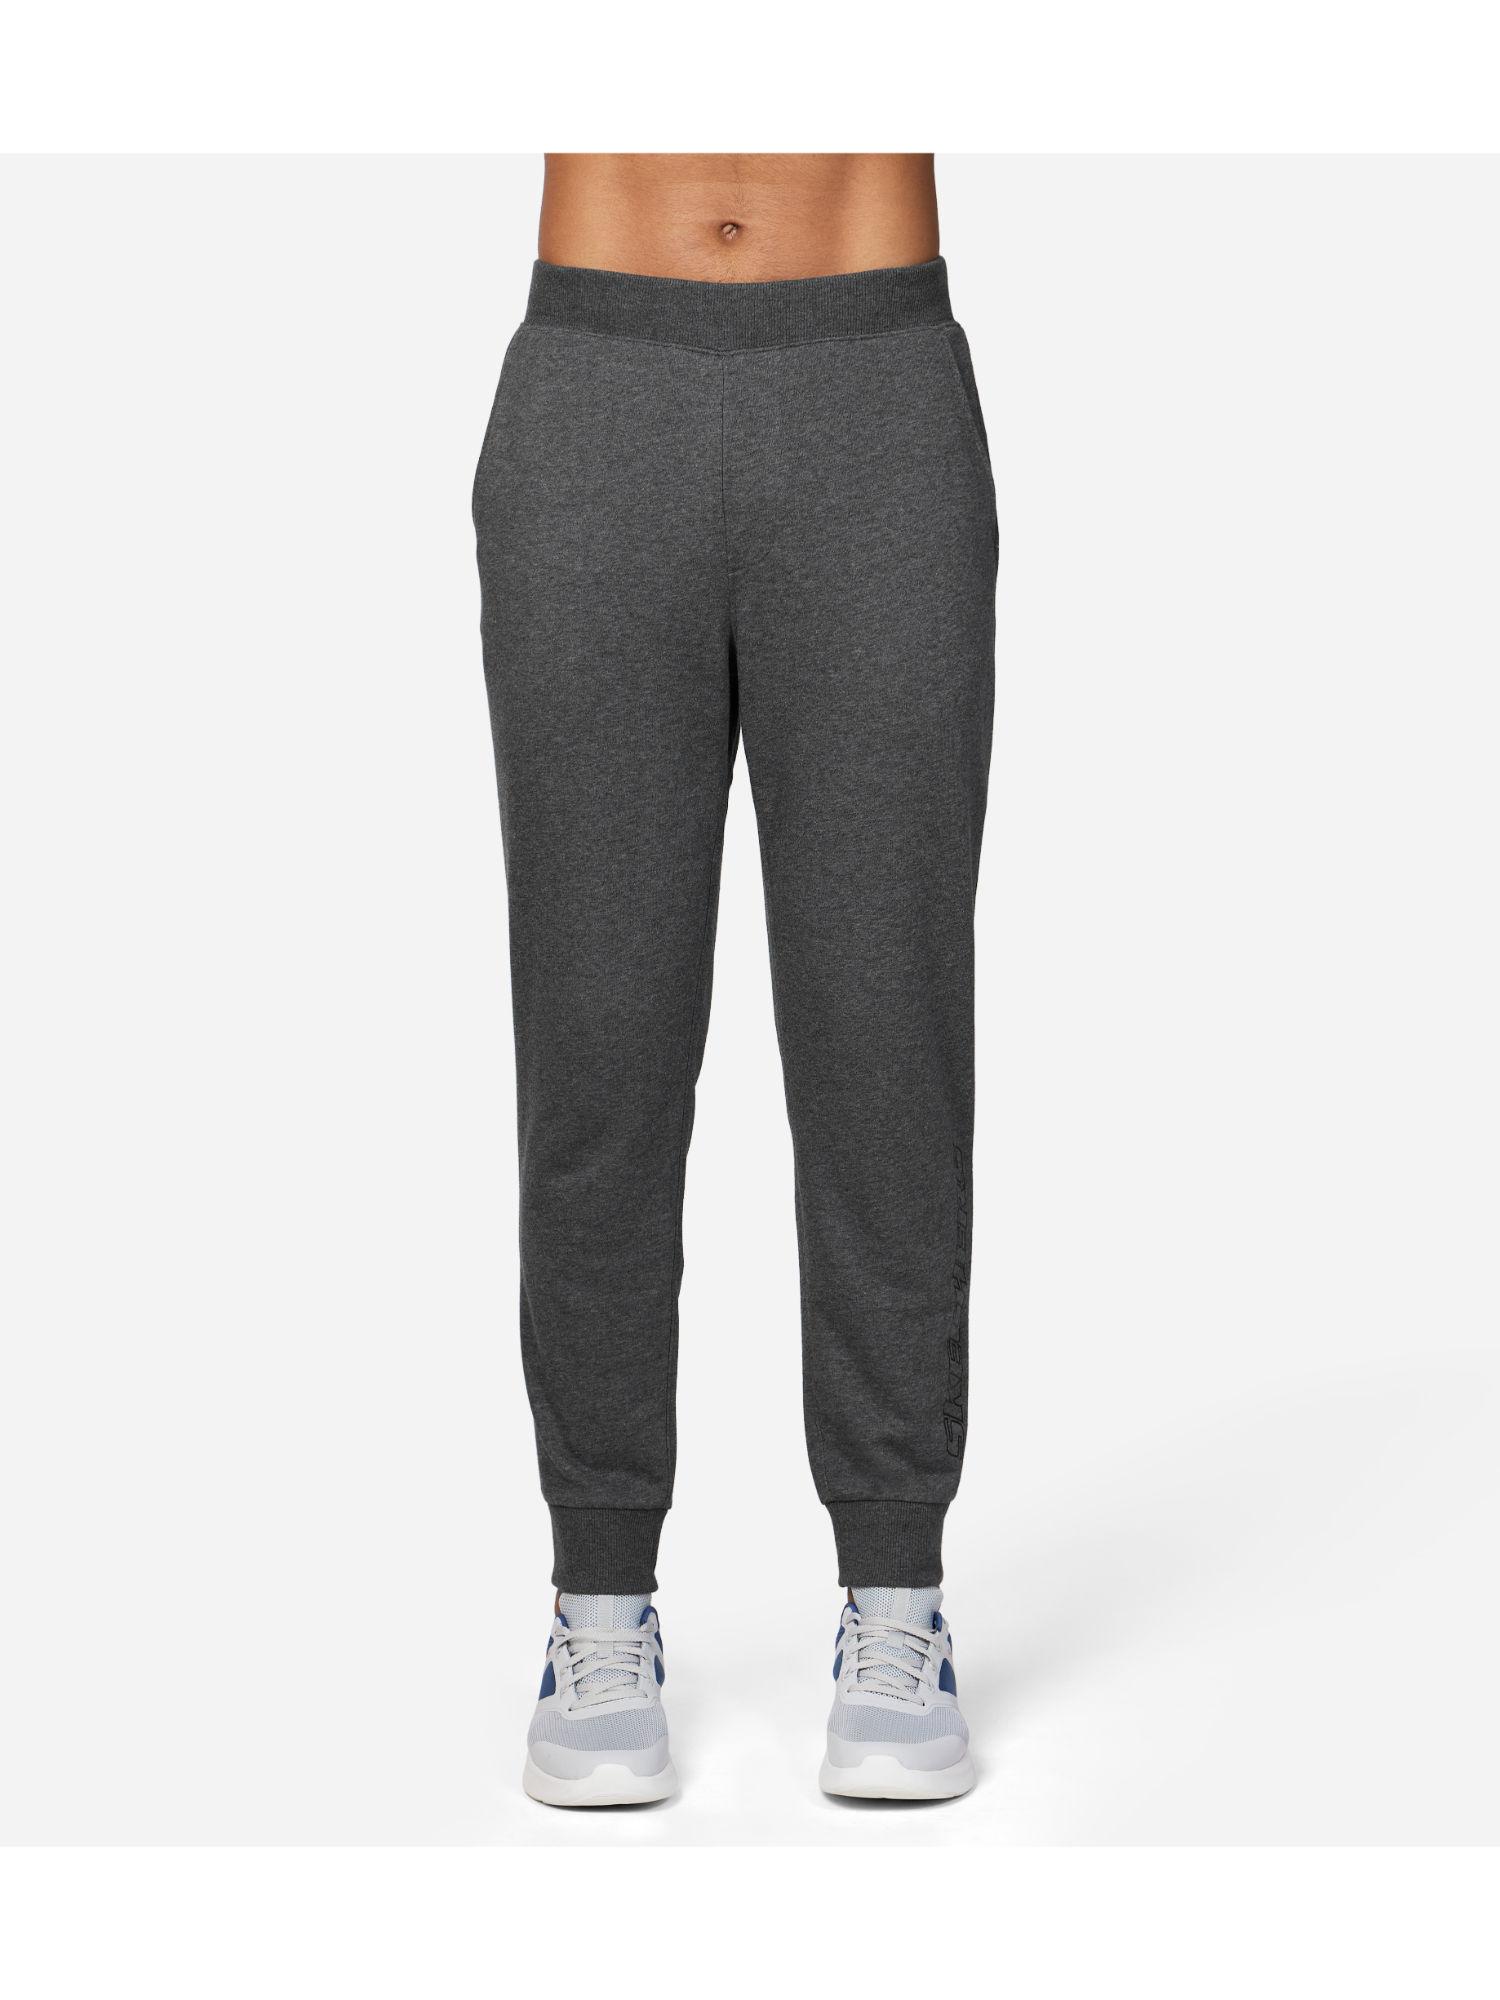 sweats-logo-jogger-grey